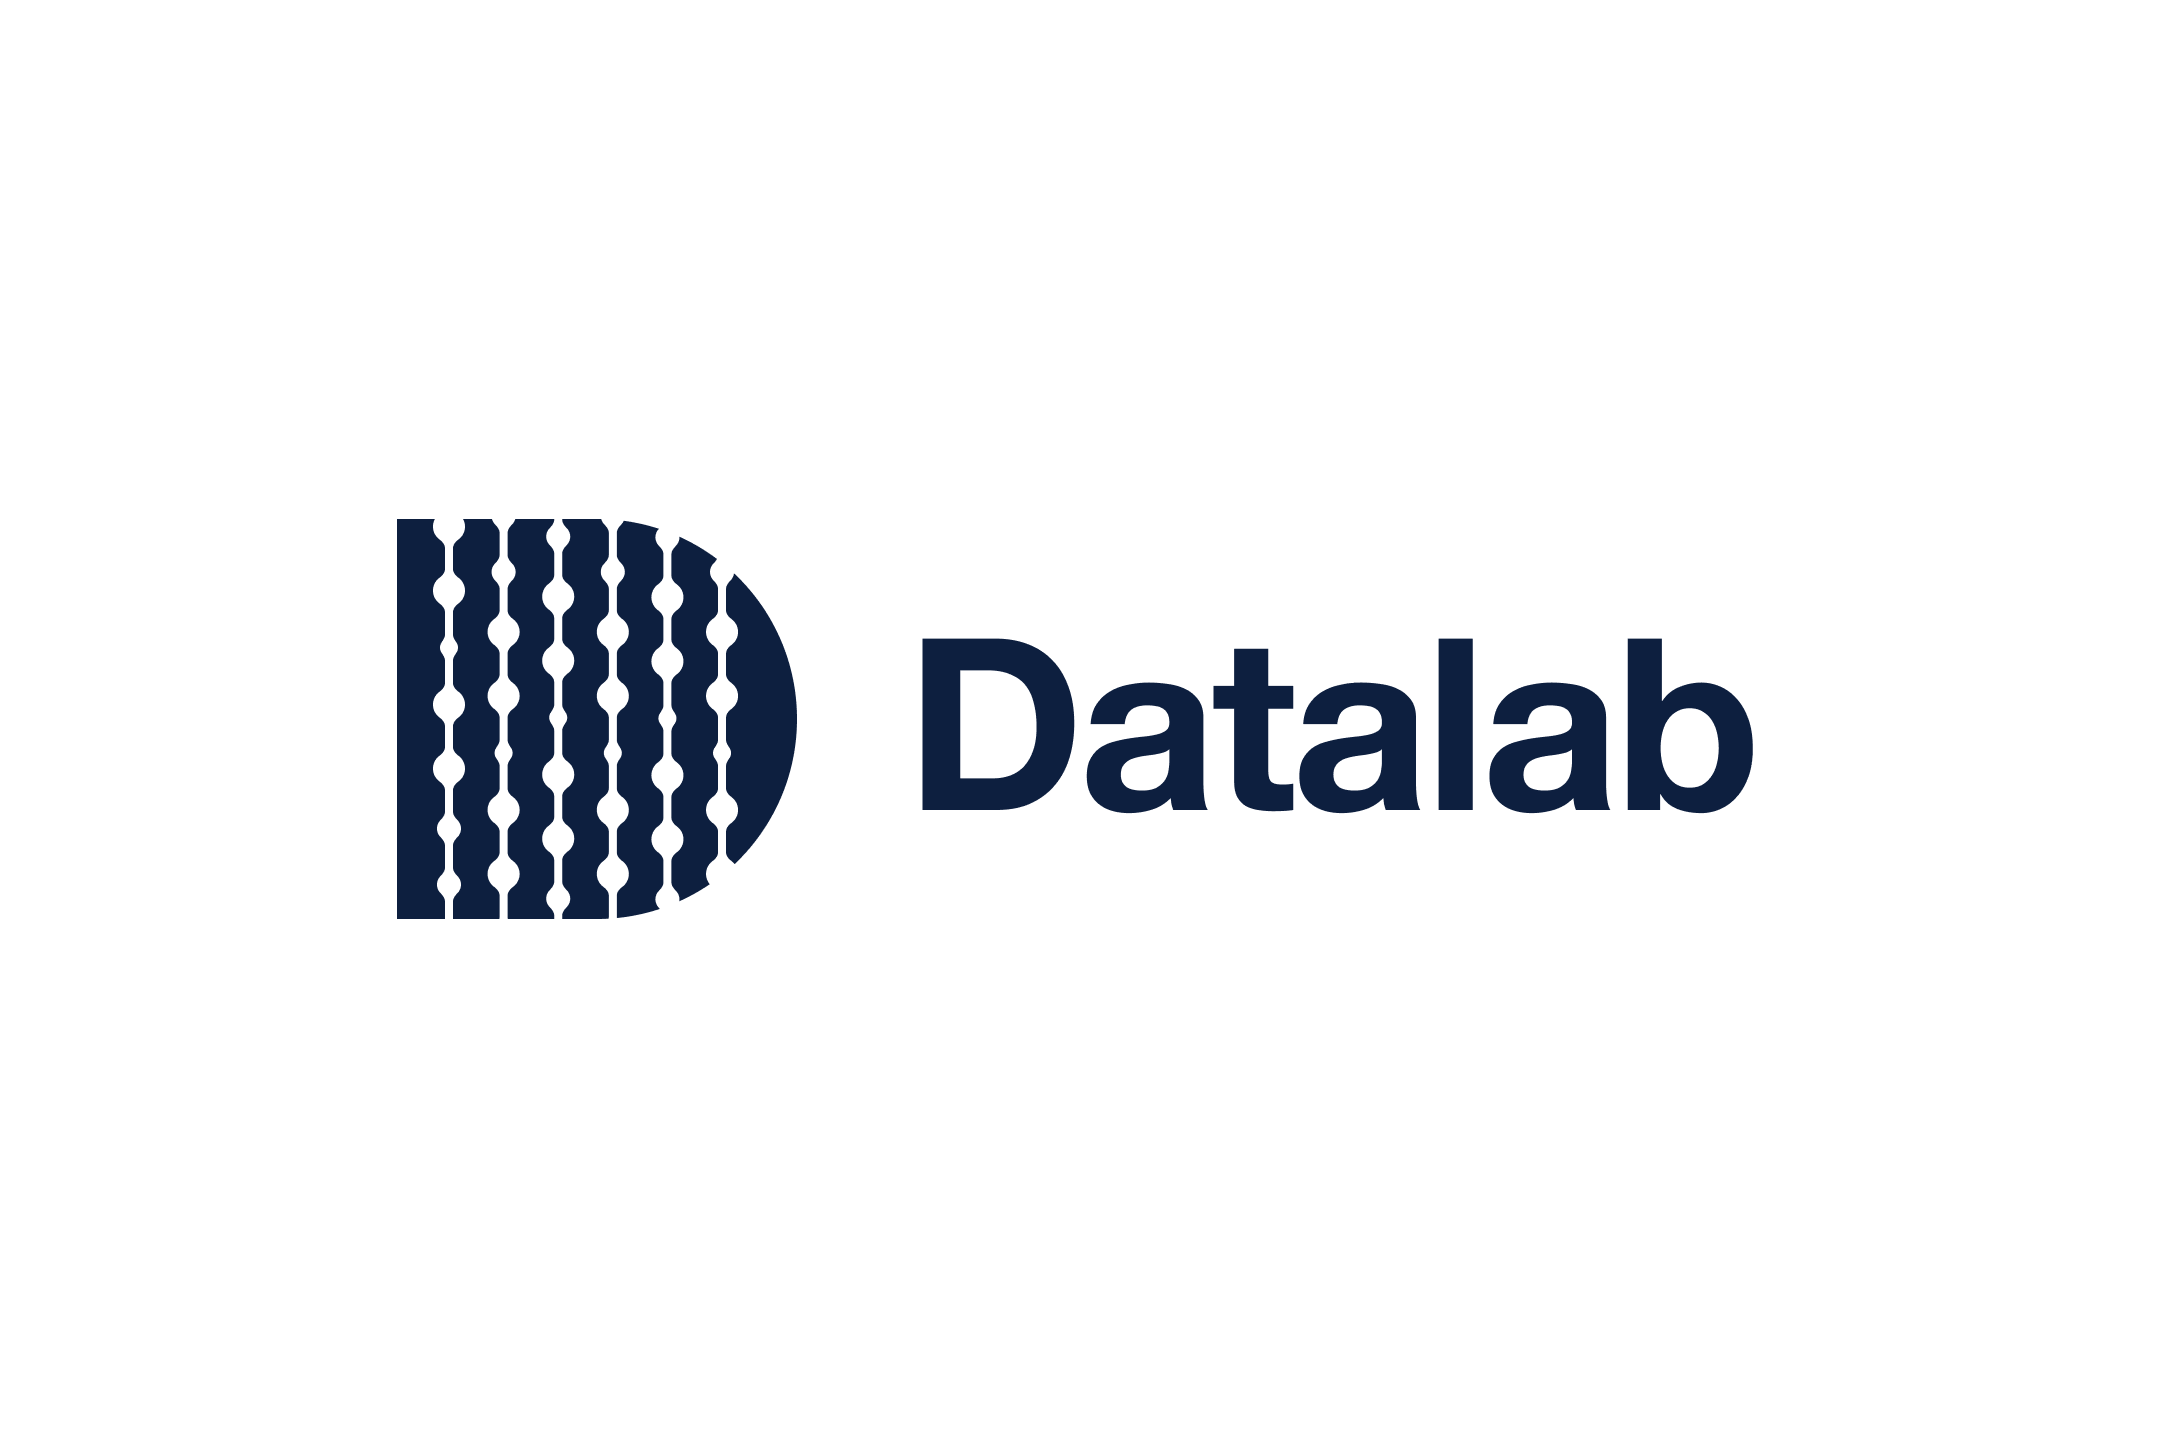 Datalab logos animated